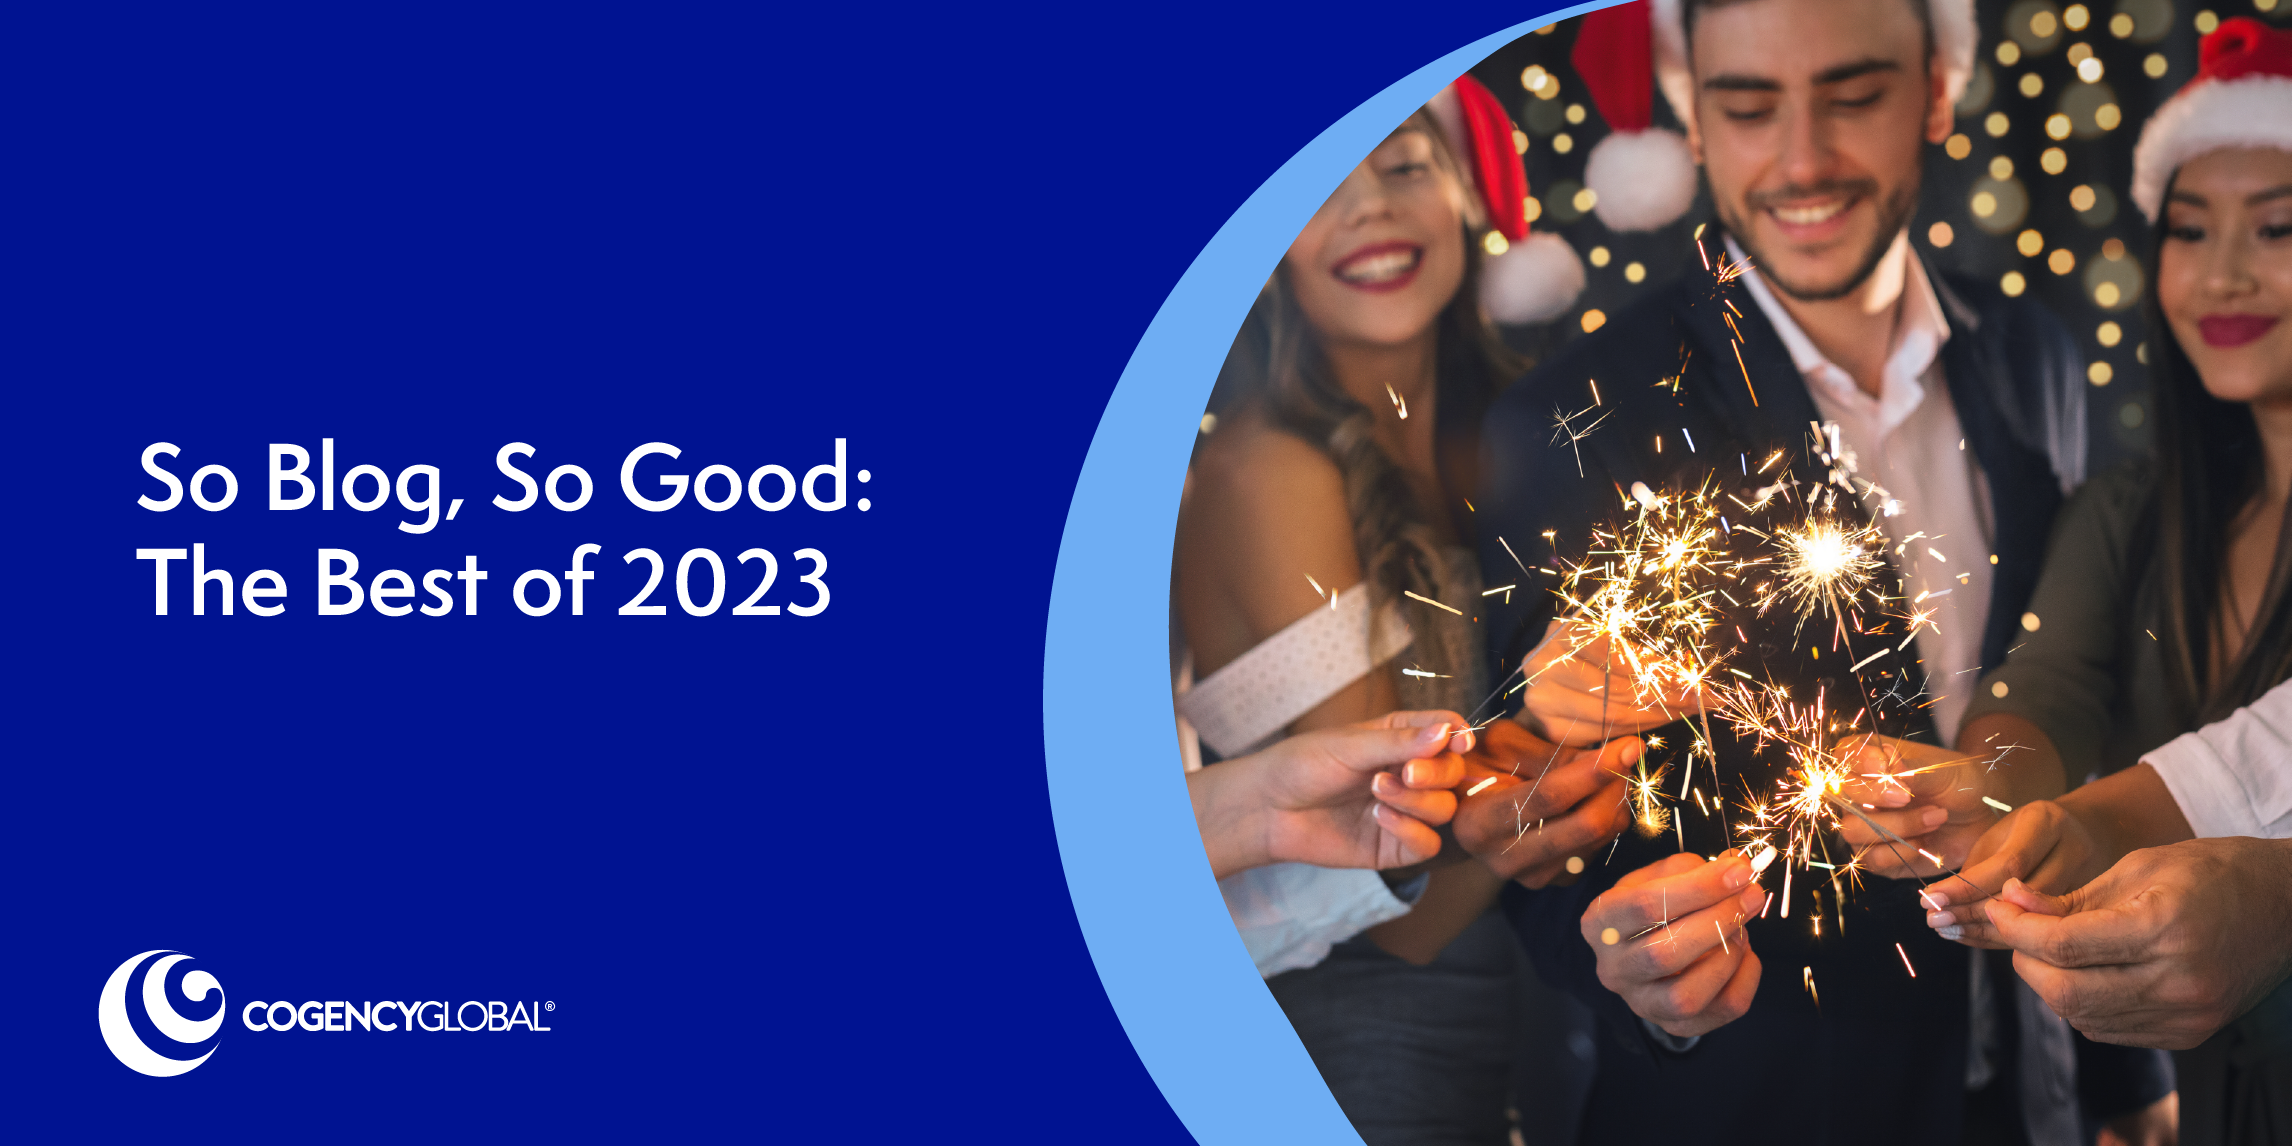 So Blog, So Good: The Best of 2023